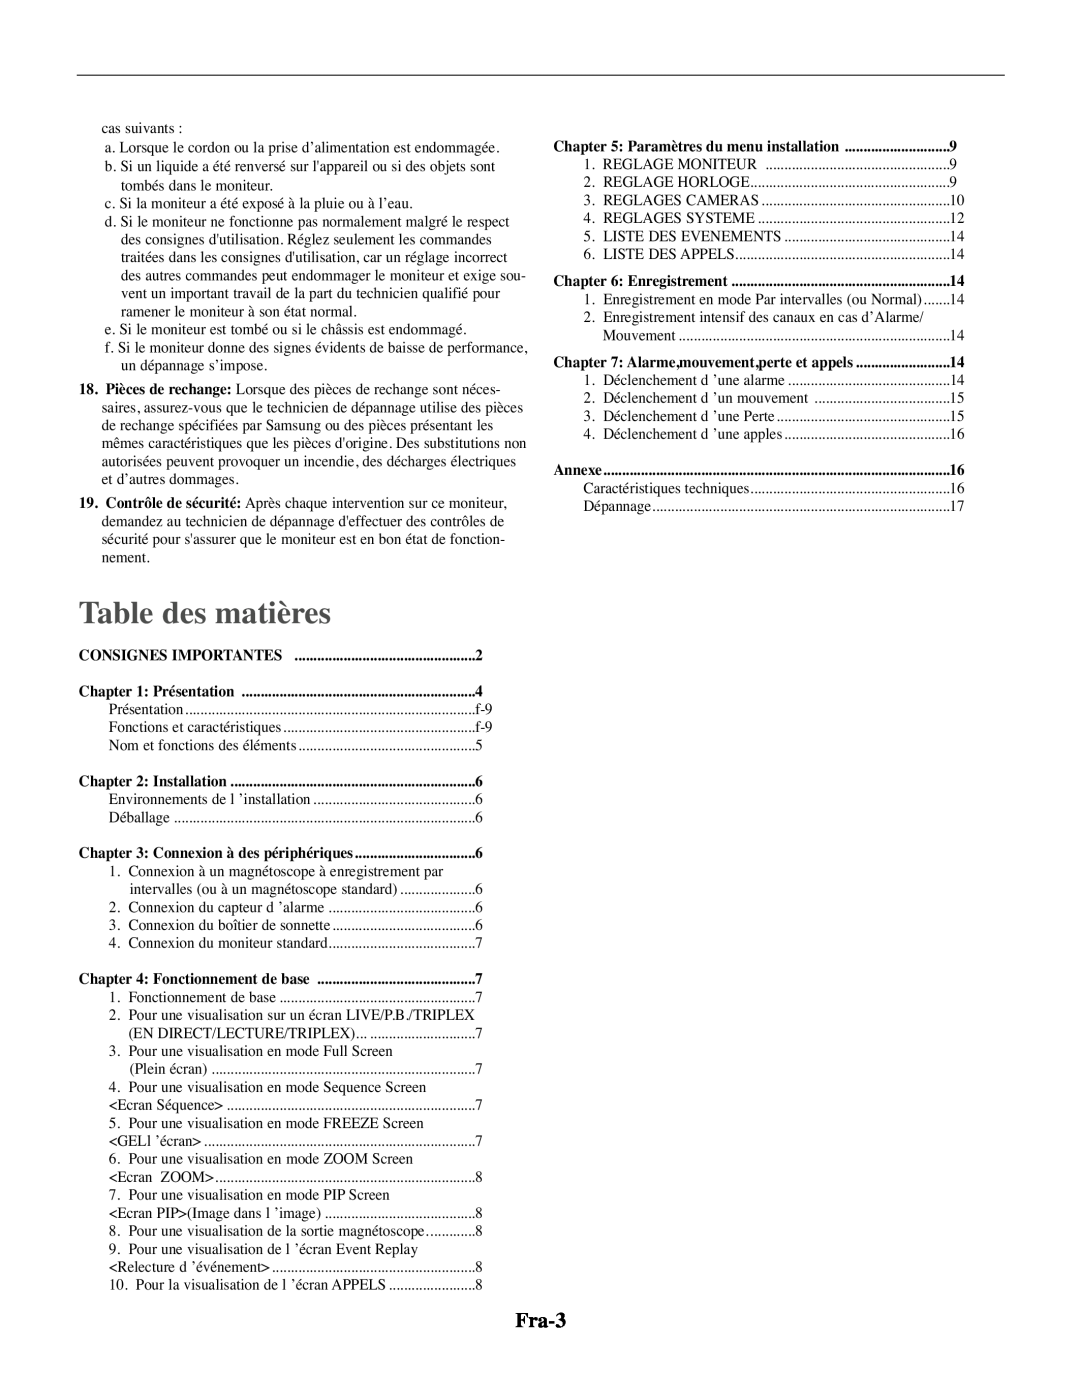 Samsung SMO-210TRP, SMO-210MP/UMG manual Table des matières, Fra-3 